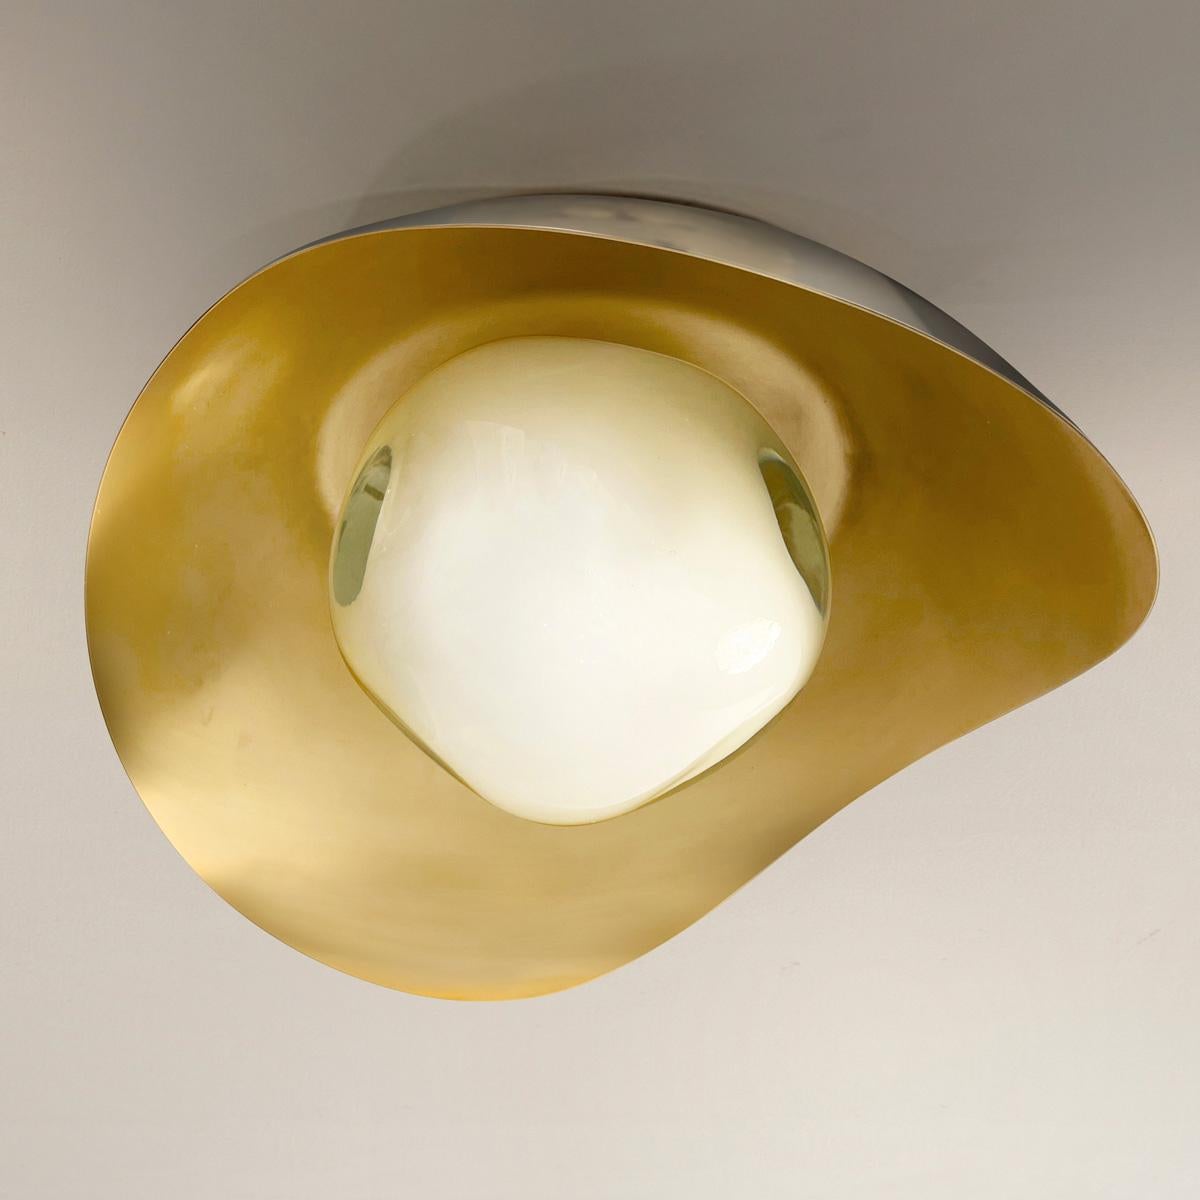 Organic Modern Perla Flushmount Ceiling Light by Gaspare Asaro-Satin Brass/Polished Nickel For Sale